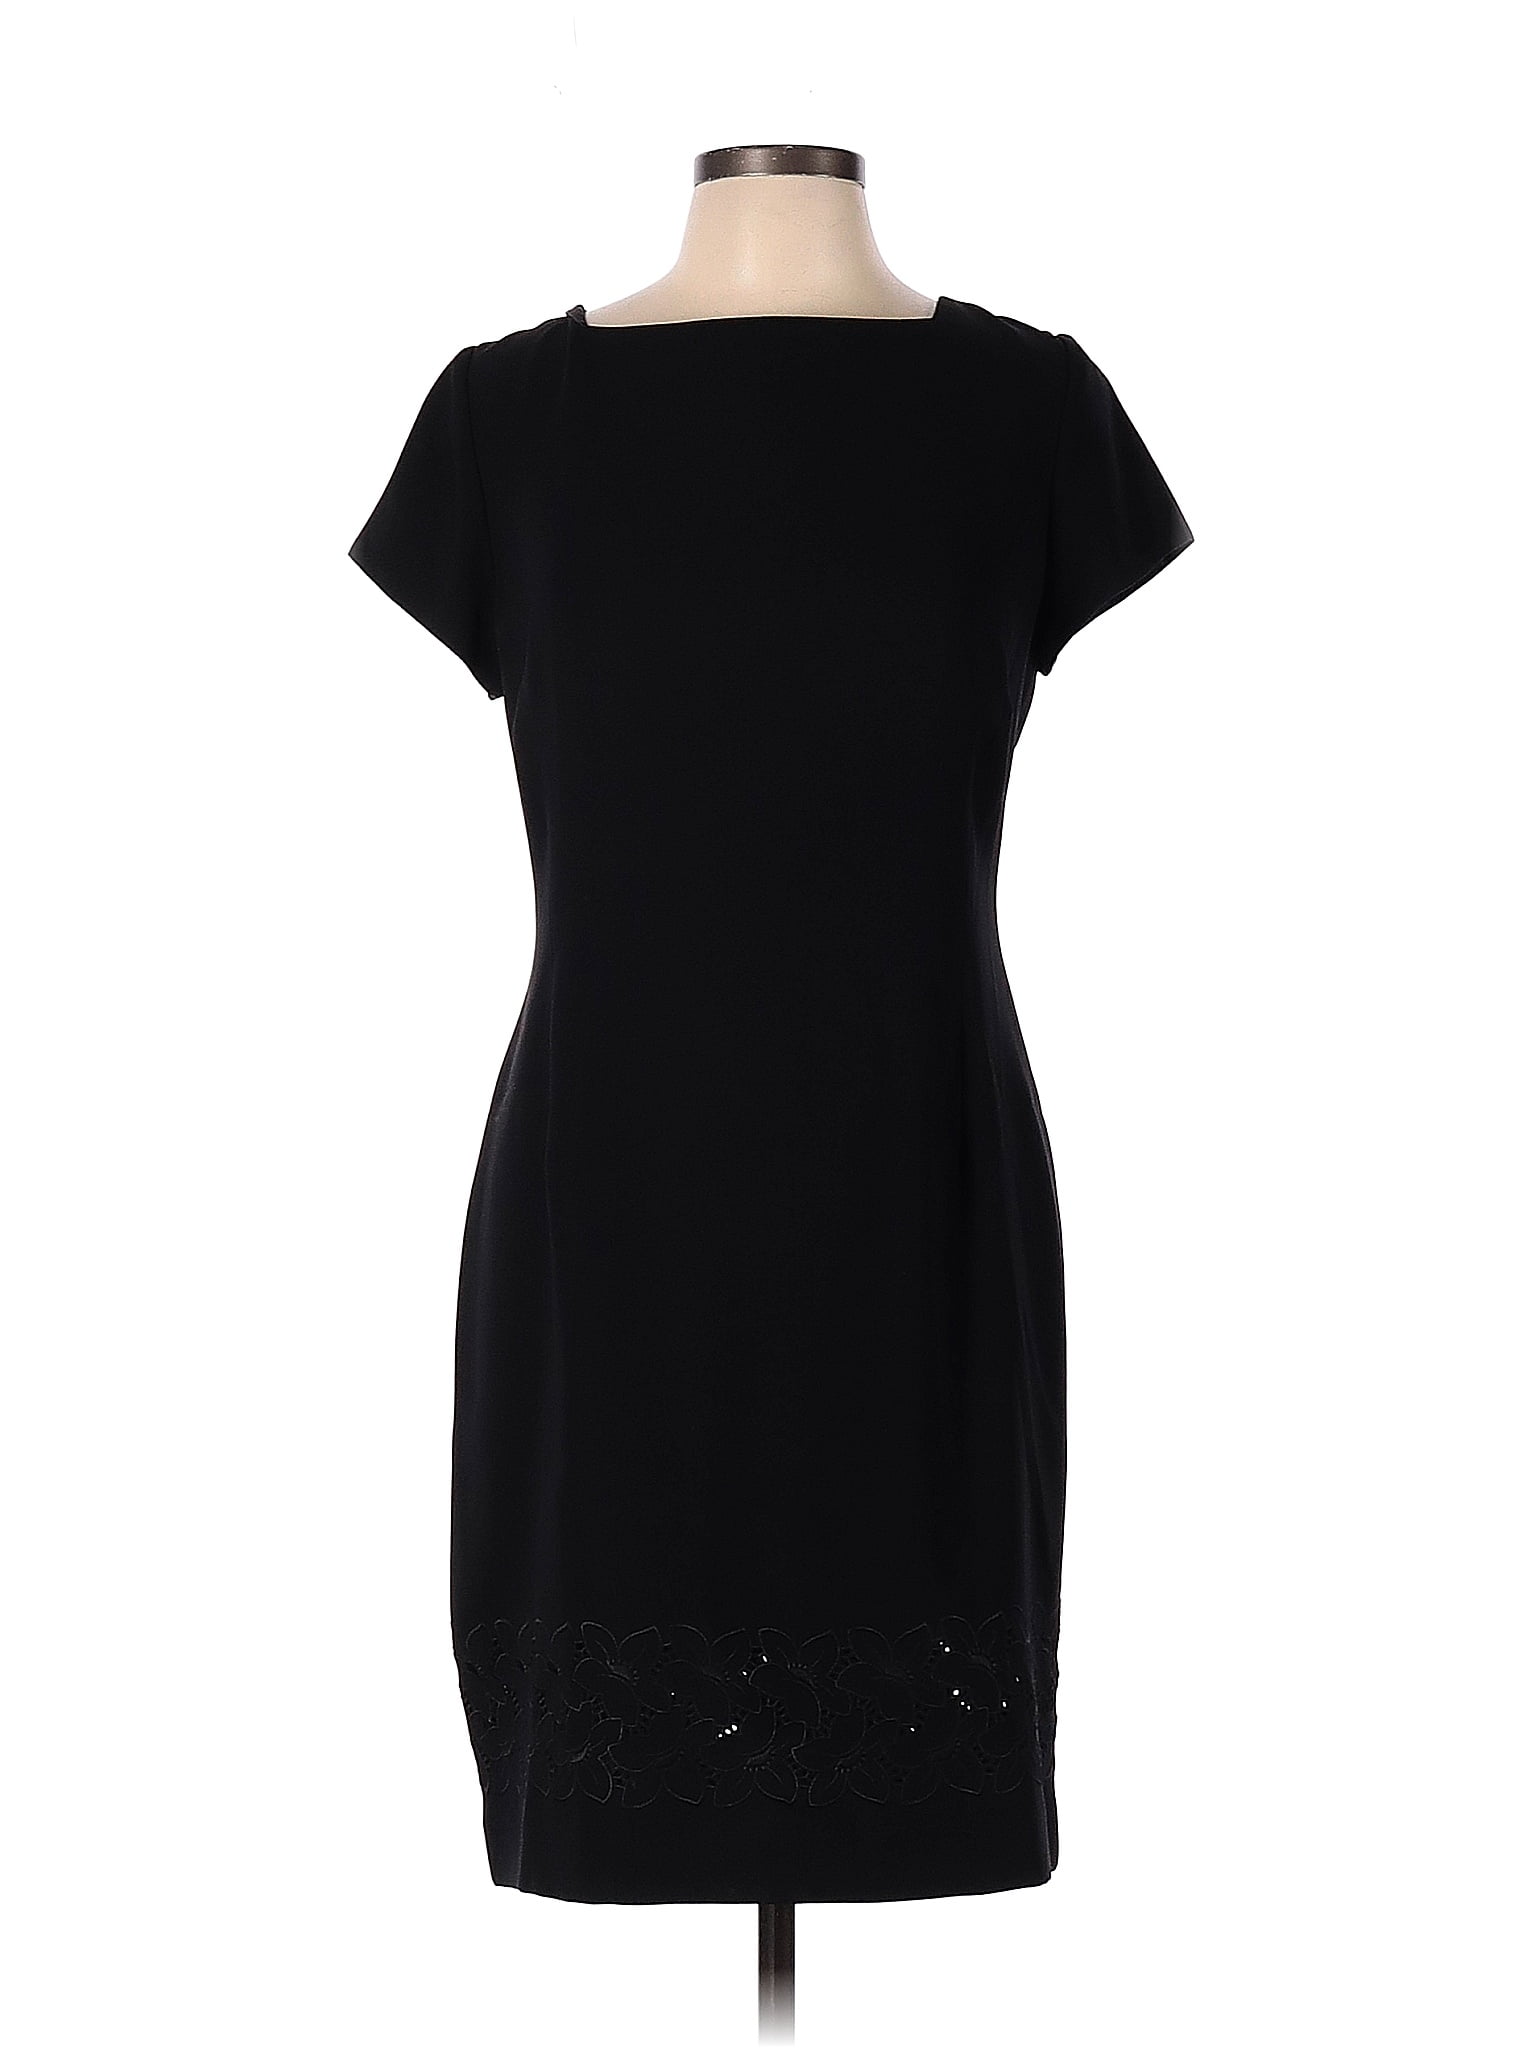 Jones New York Solid Black Casual Dress Size 12 - 79% off | thredUP